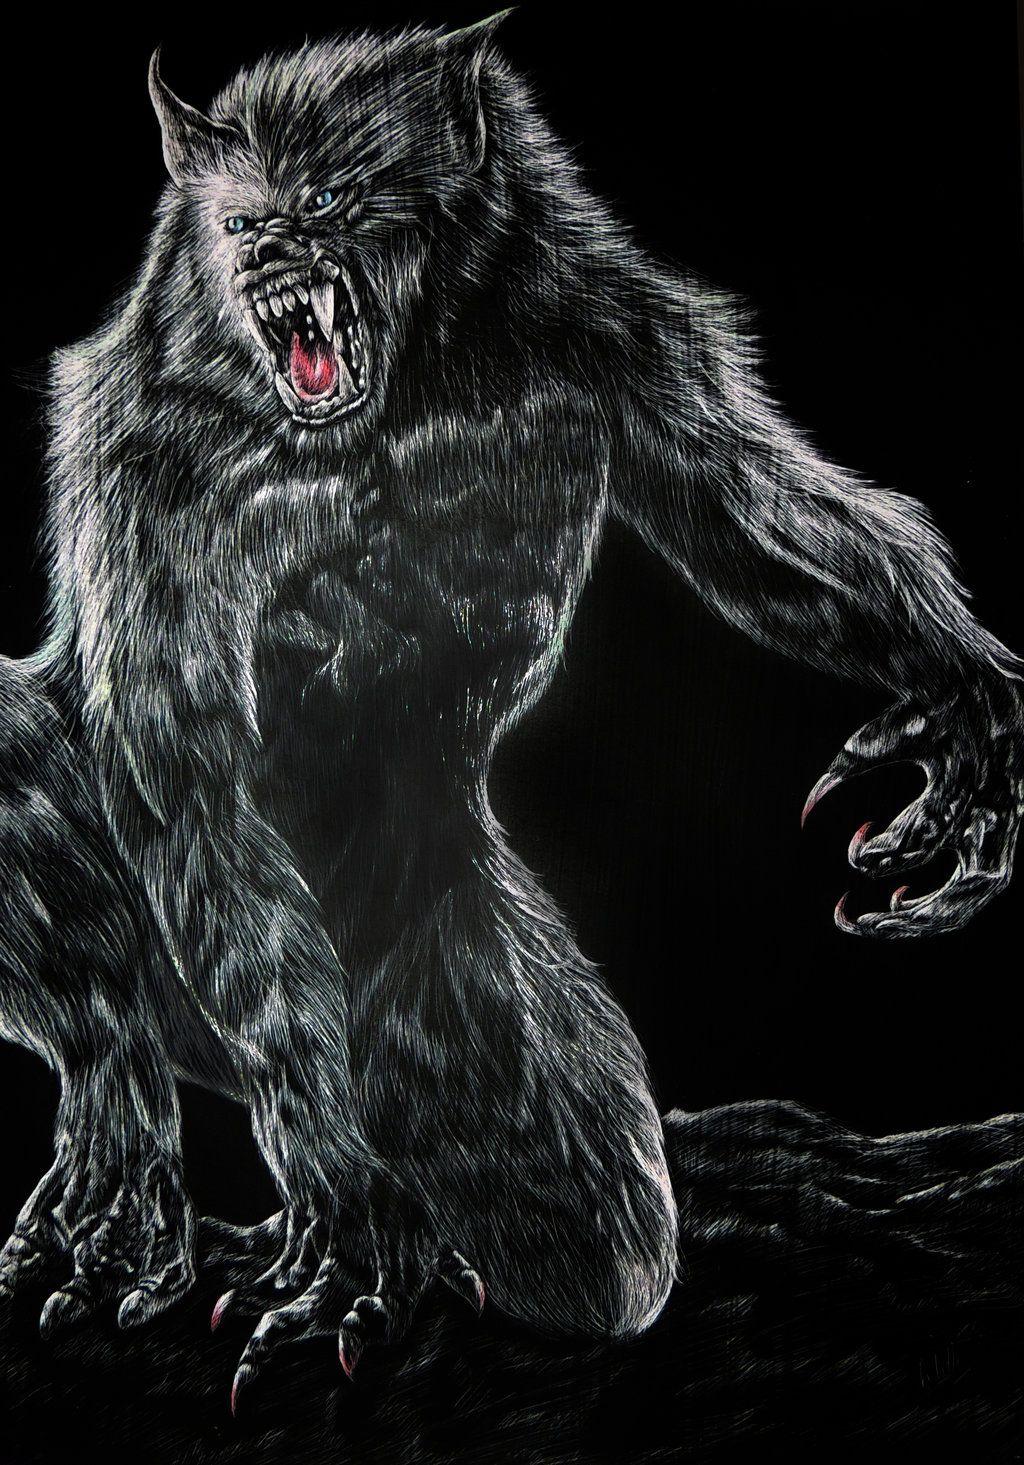 Van Helsing Werewolf Wallpaper Picture On Wallpaper 1080p HD